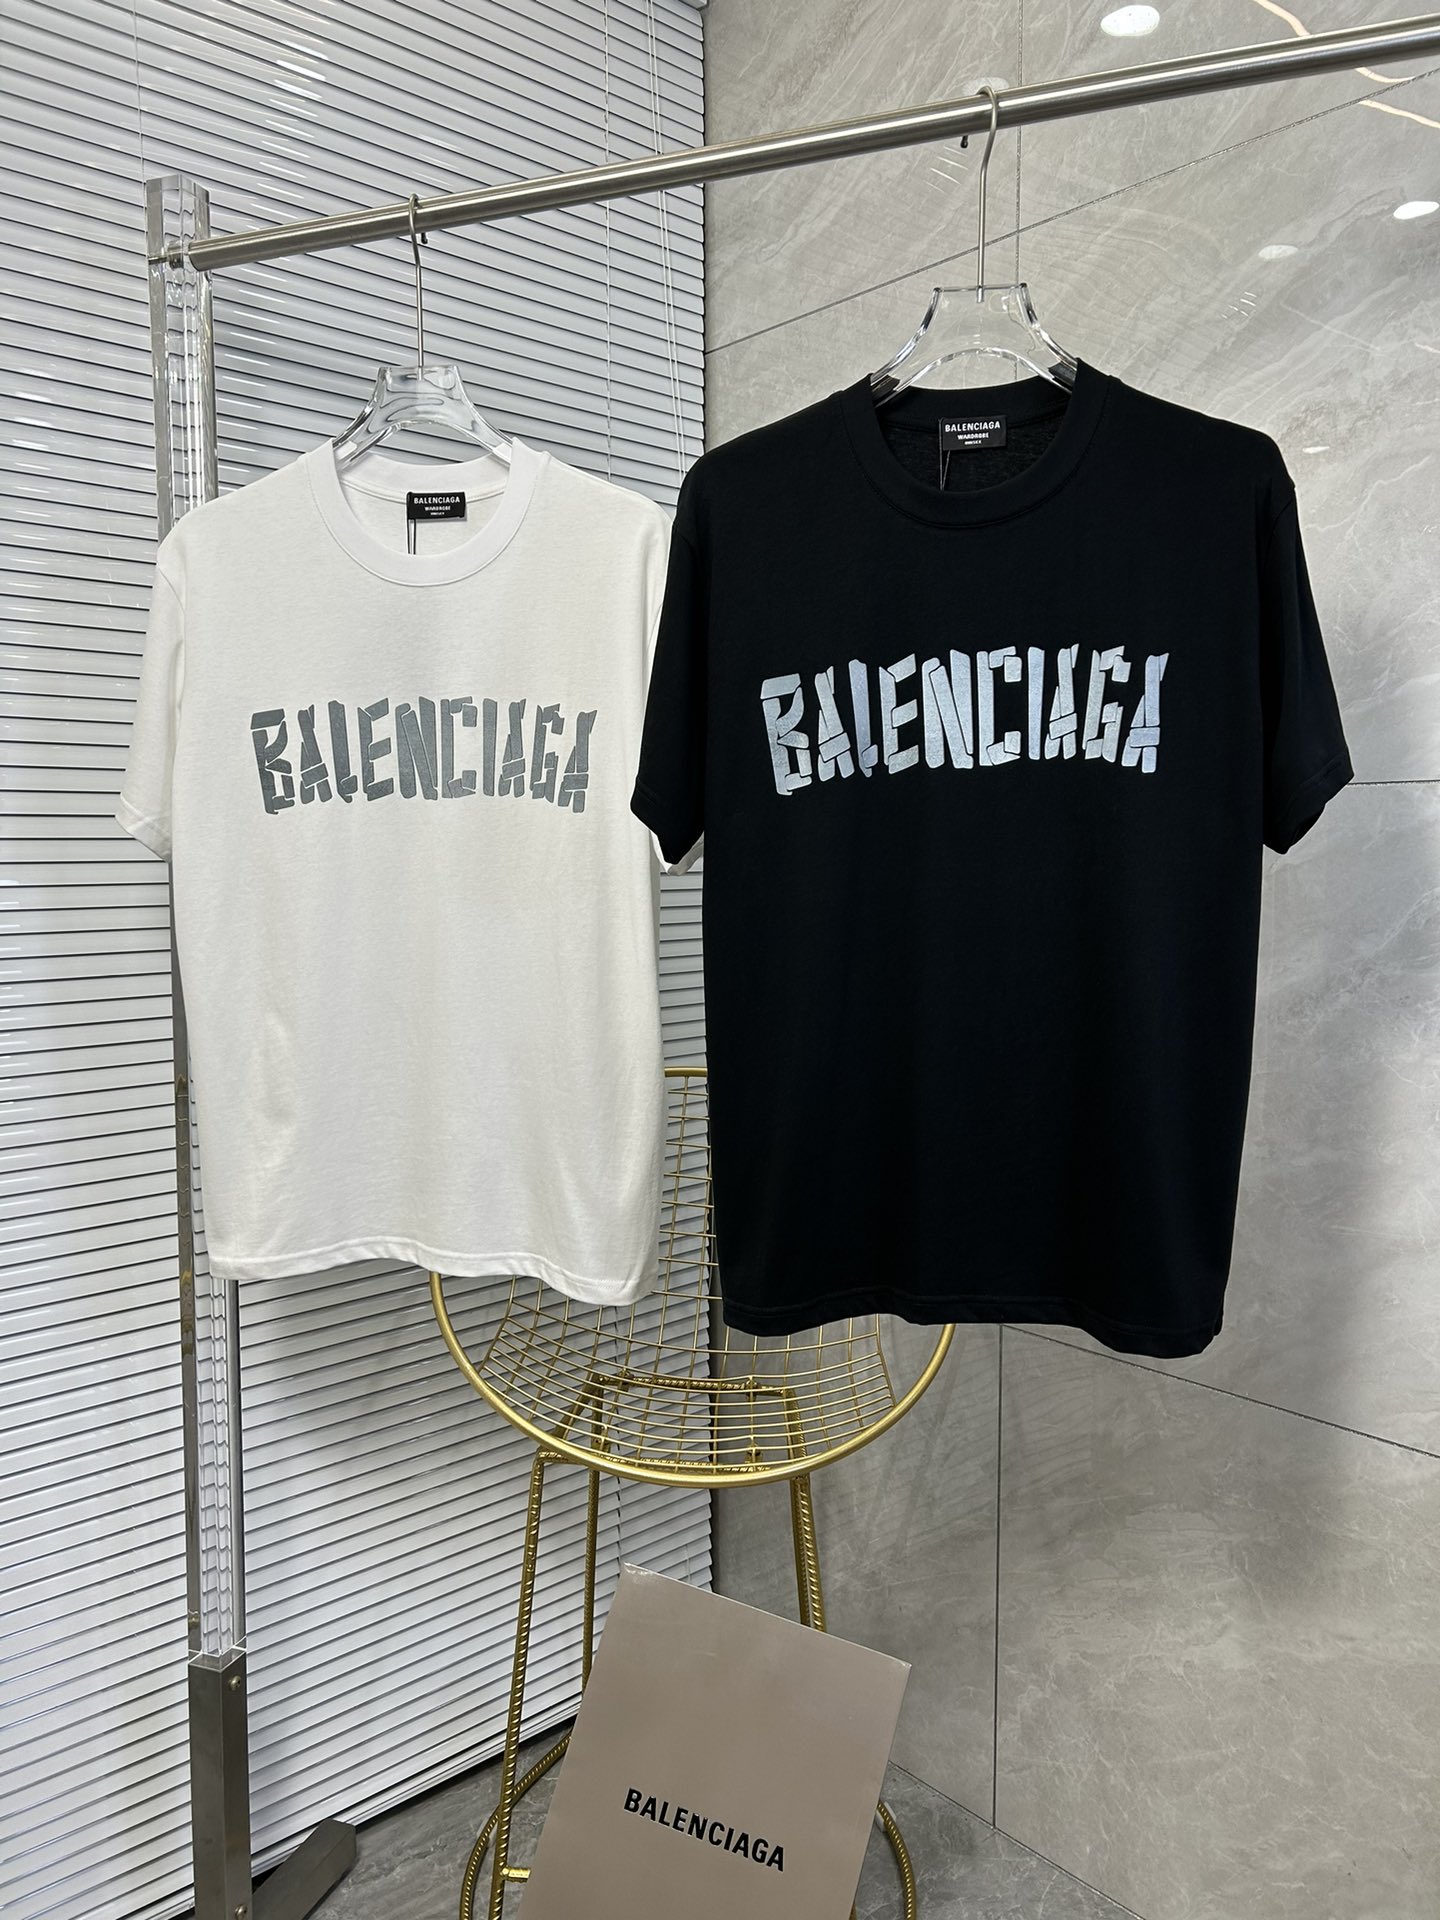 Where to Buy
 Balenciaga Clothing T-Shirt Black White Printing Unisex Cotton Fashion Short Sleeve